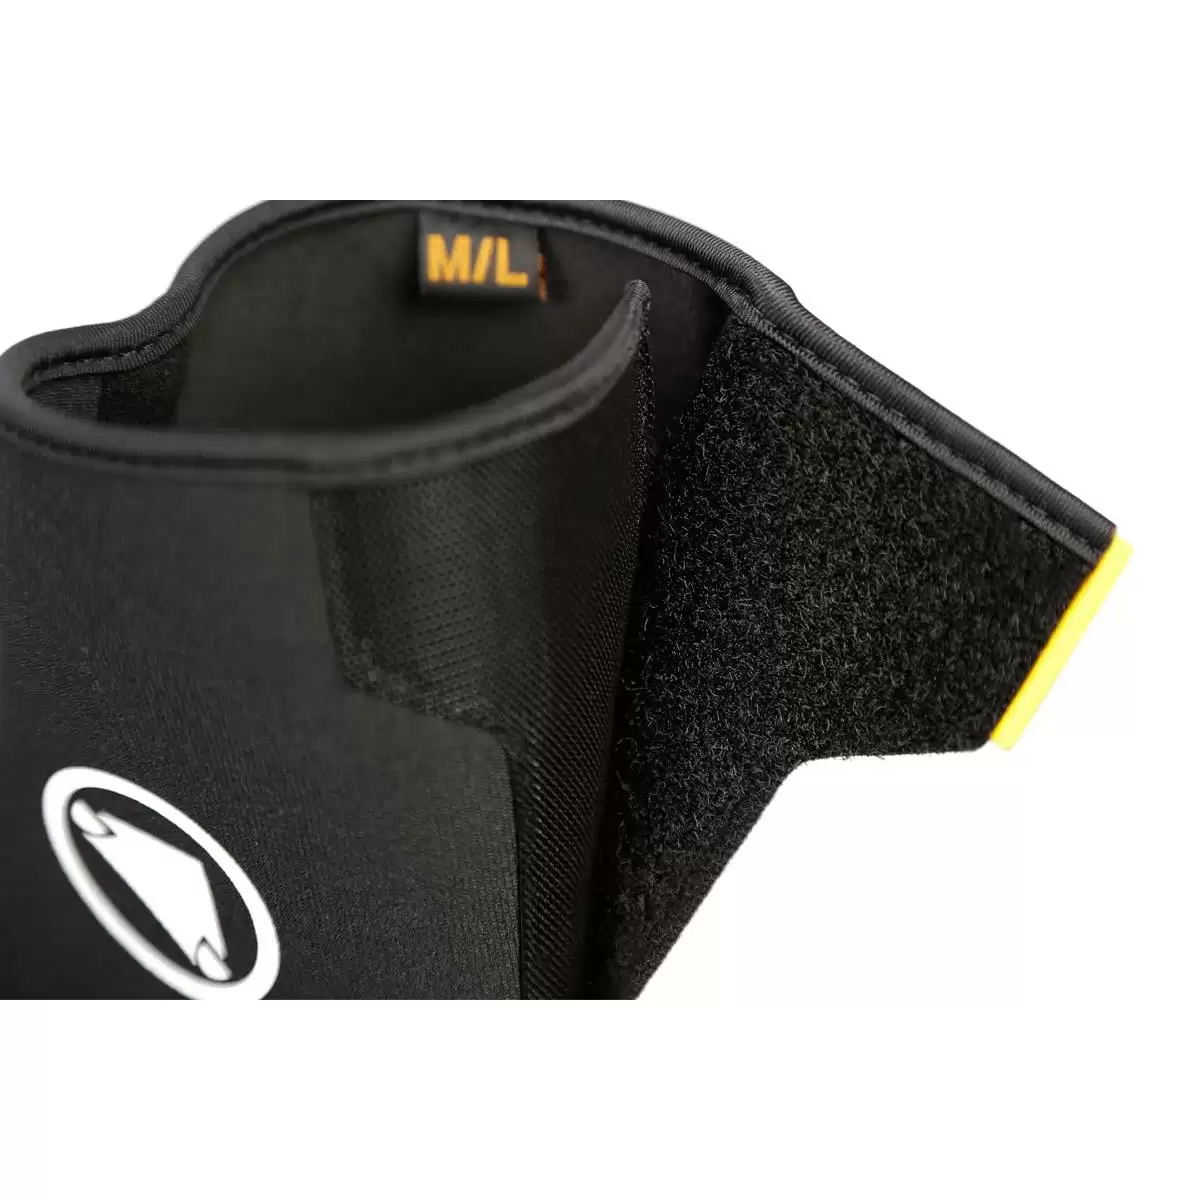 MT500 Plus Overshoe black waterproof size M/L (40-41) #1